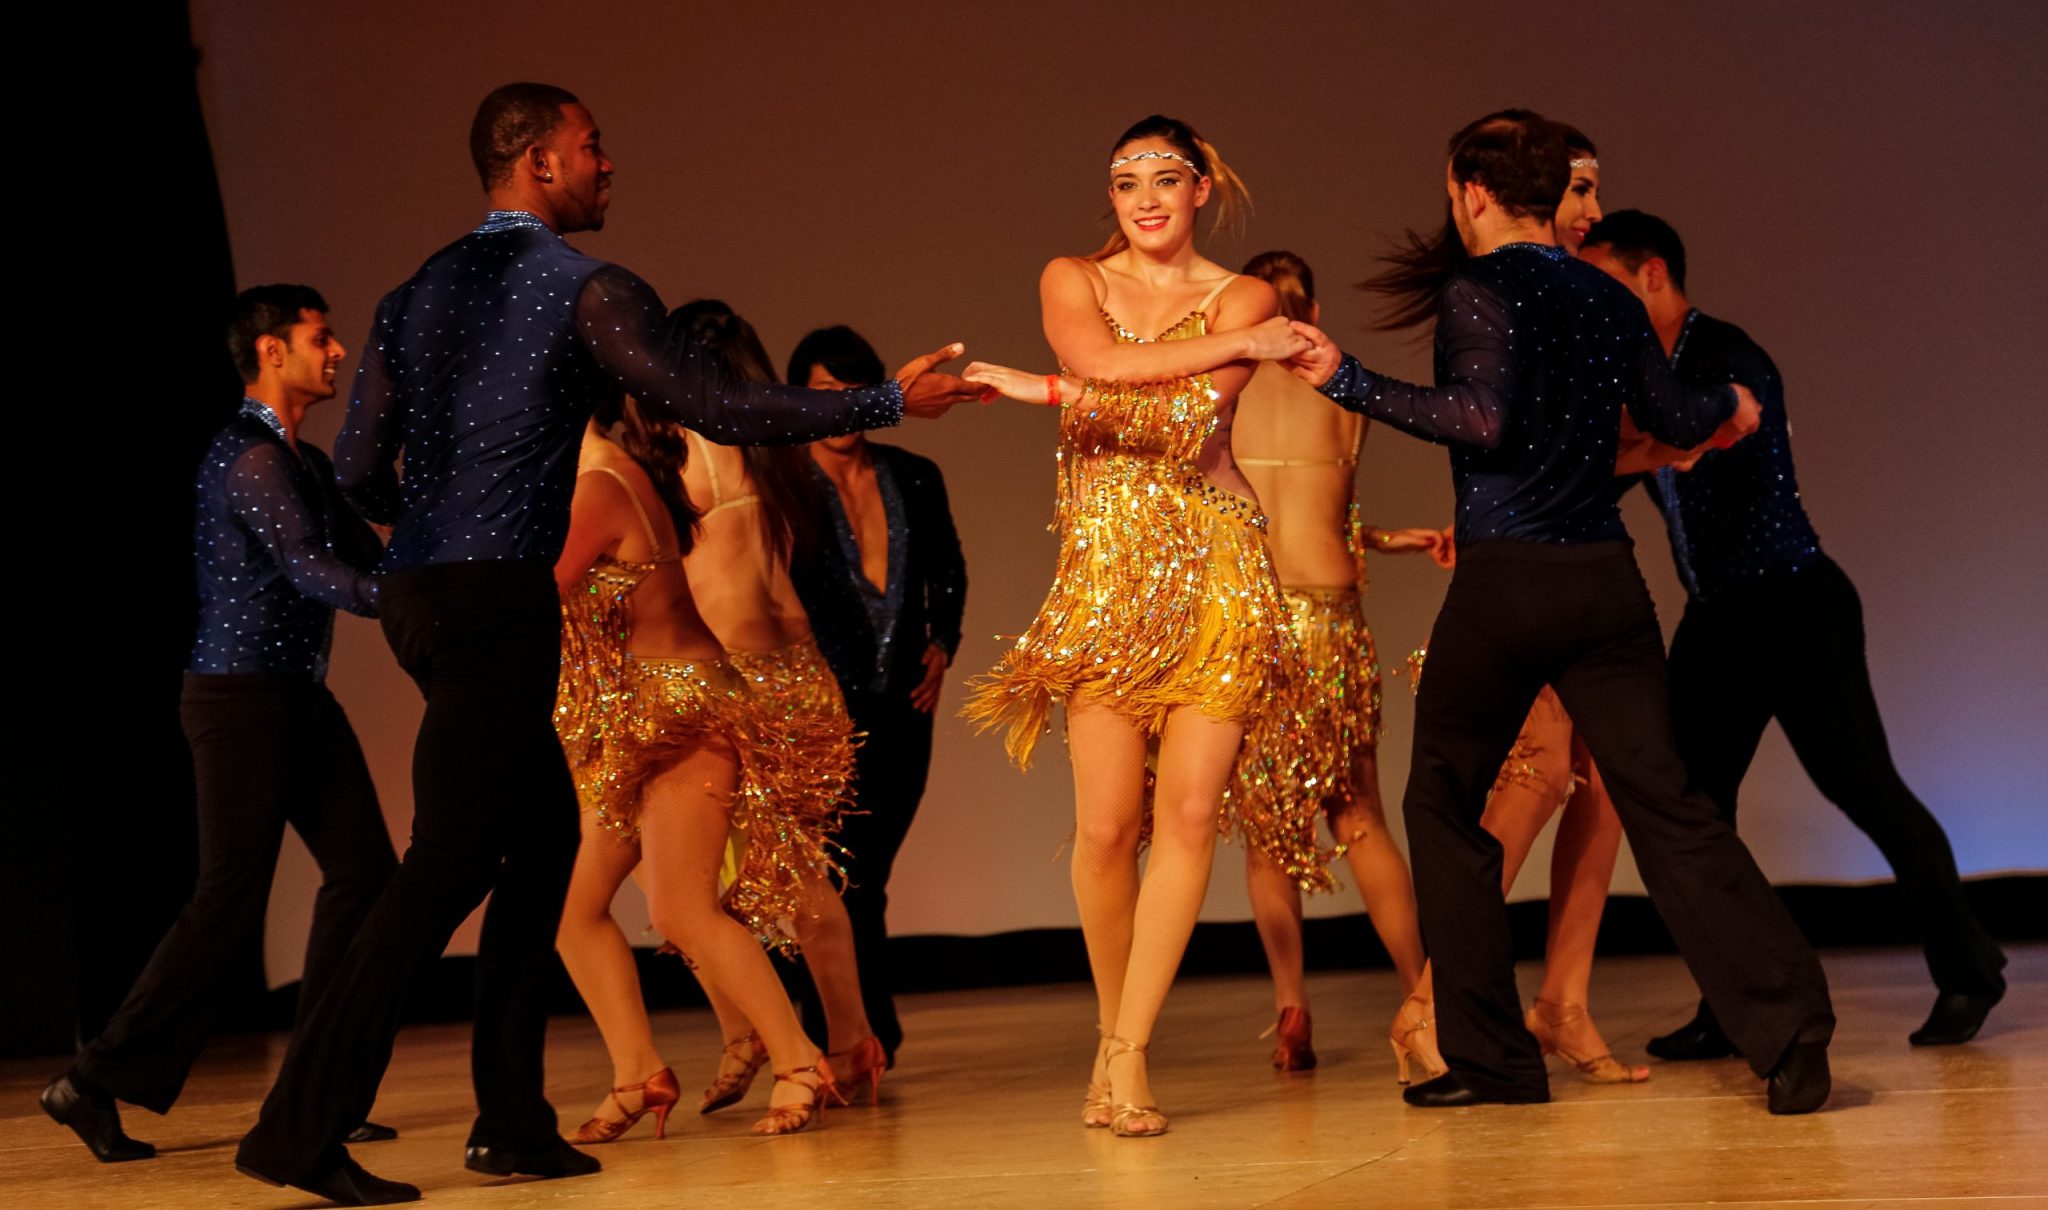 Сальса Руэда. Латиноамериканские танцы ча ча ча. Румба Самба ча-ча-ча. Сальса танец.